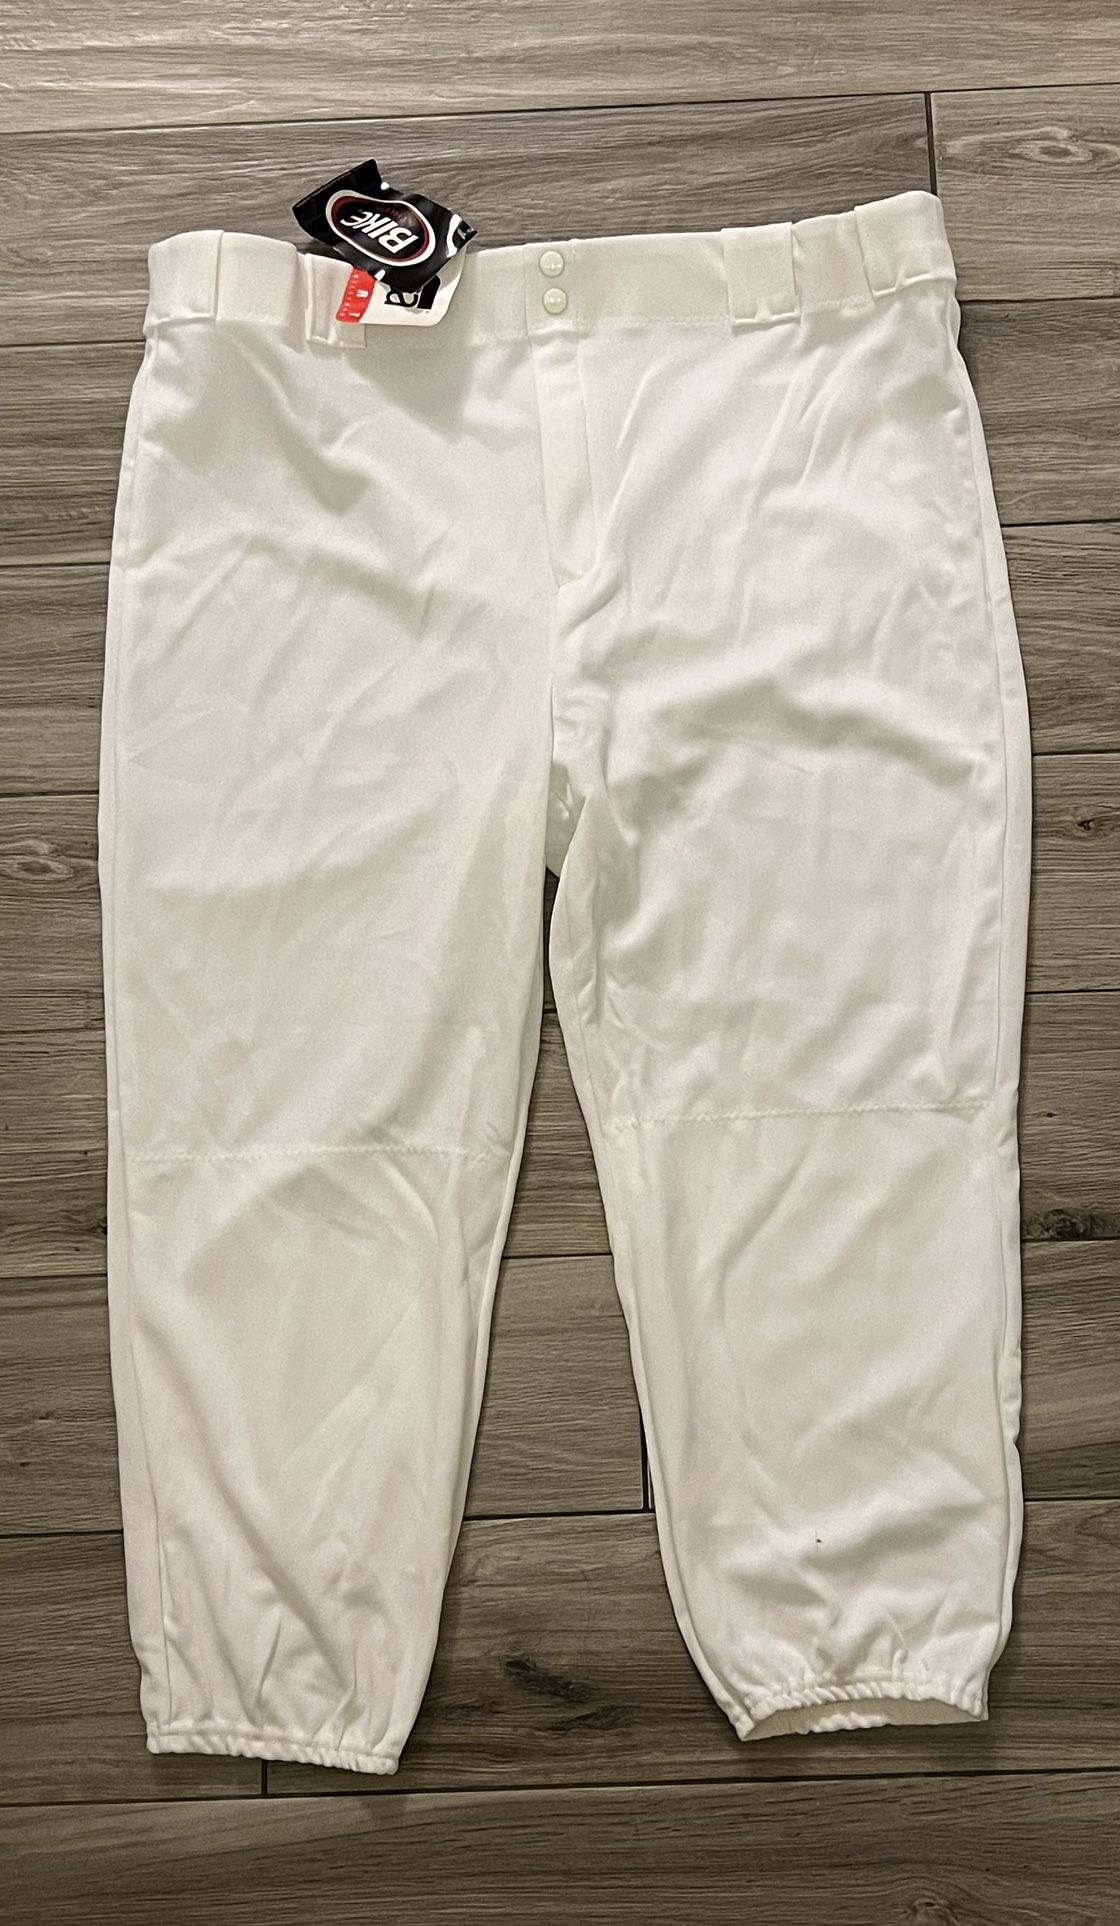 Bike Athletic Style 4108 White Adult Baseball Pants w/Belt Loops Size XXL NEW